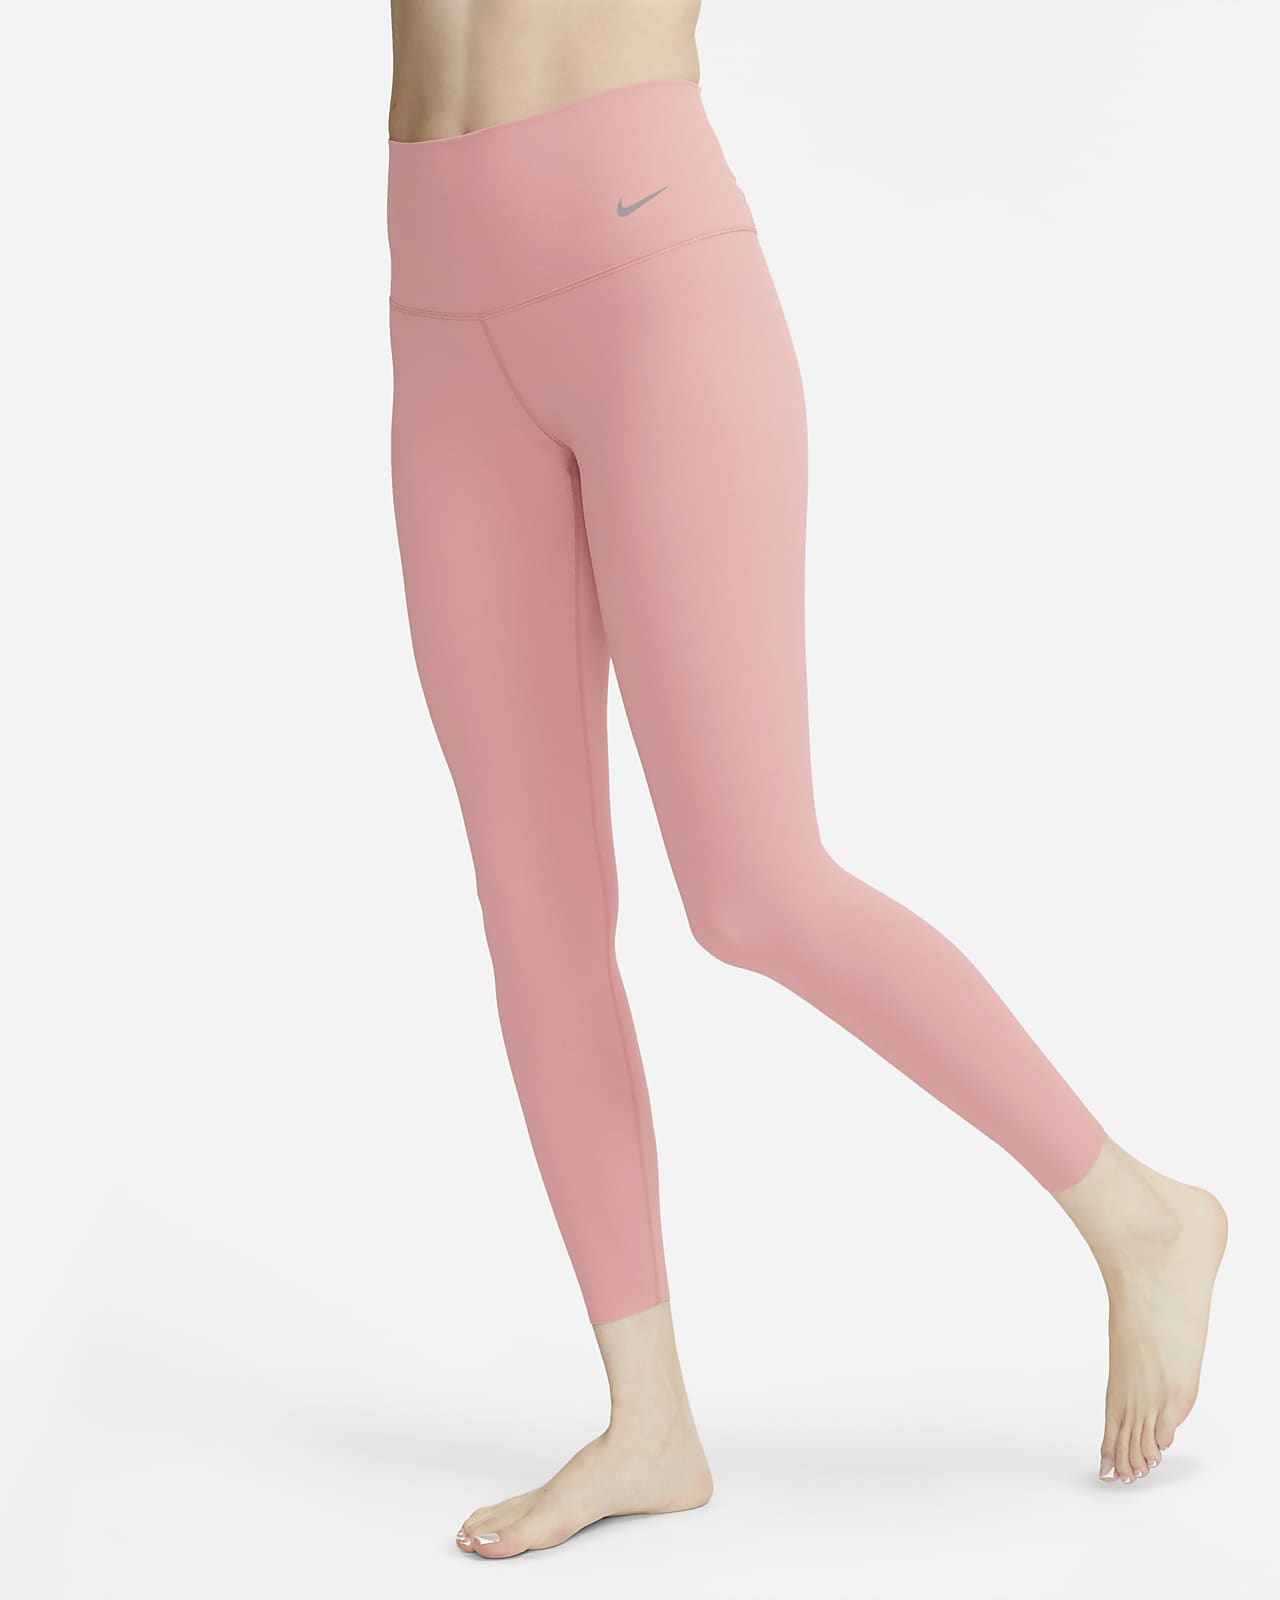 Legging 7/8 woman Nike Dri-Fit HR - Leggings - Women's clothing - Fitness